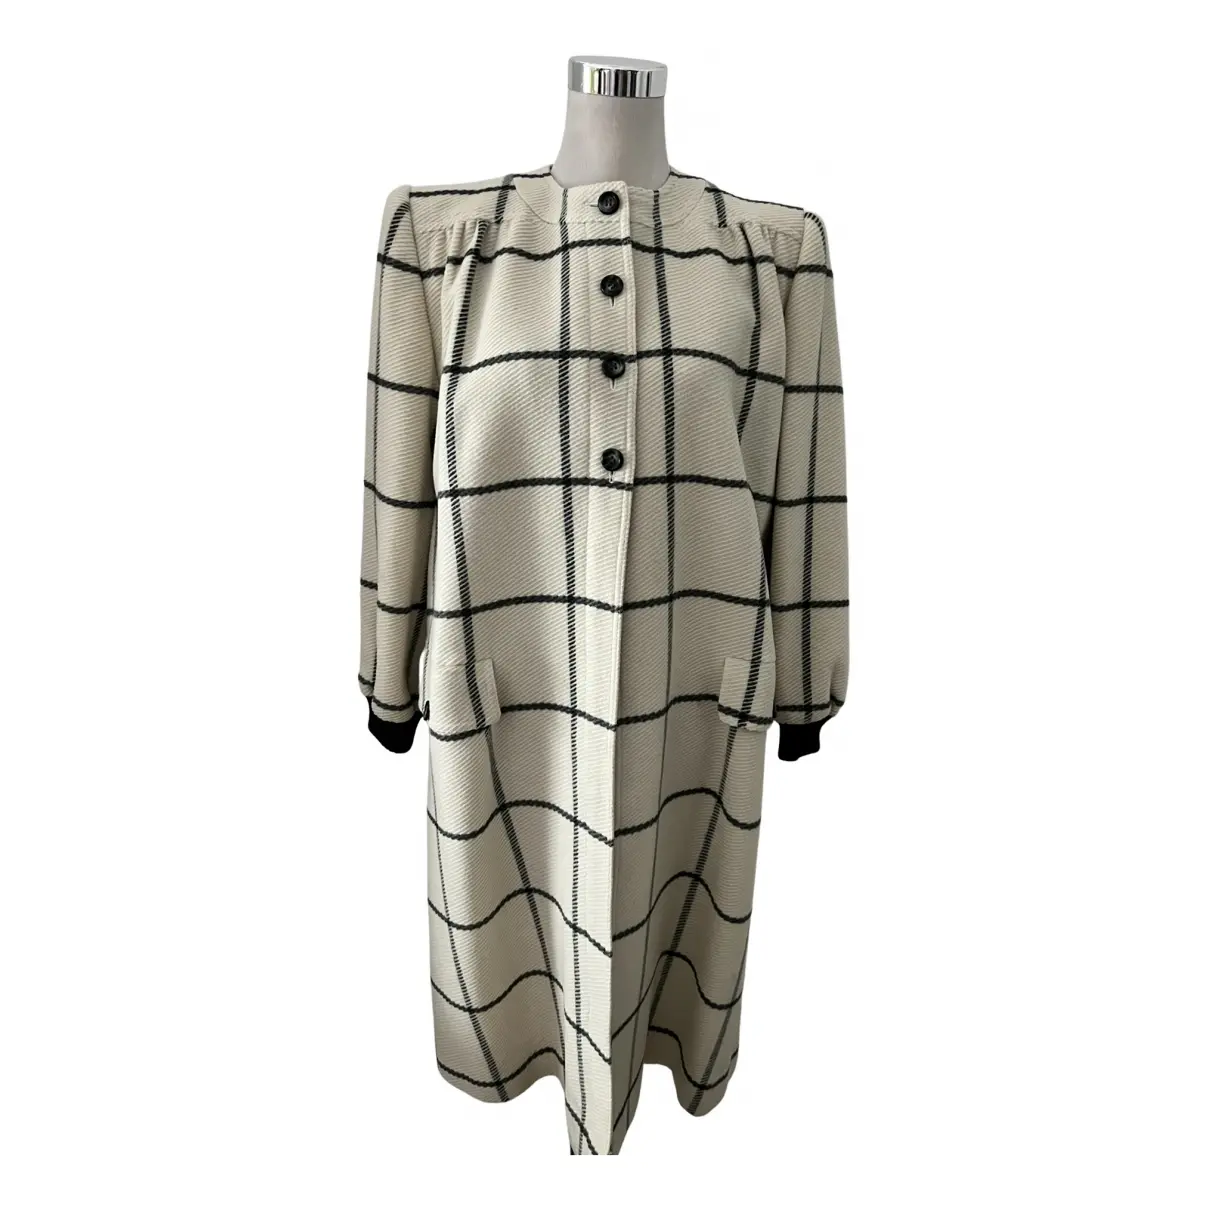 Wool coat Valentino Garavani - Vintage